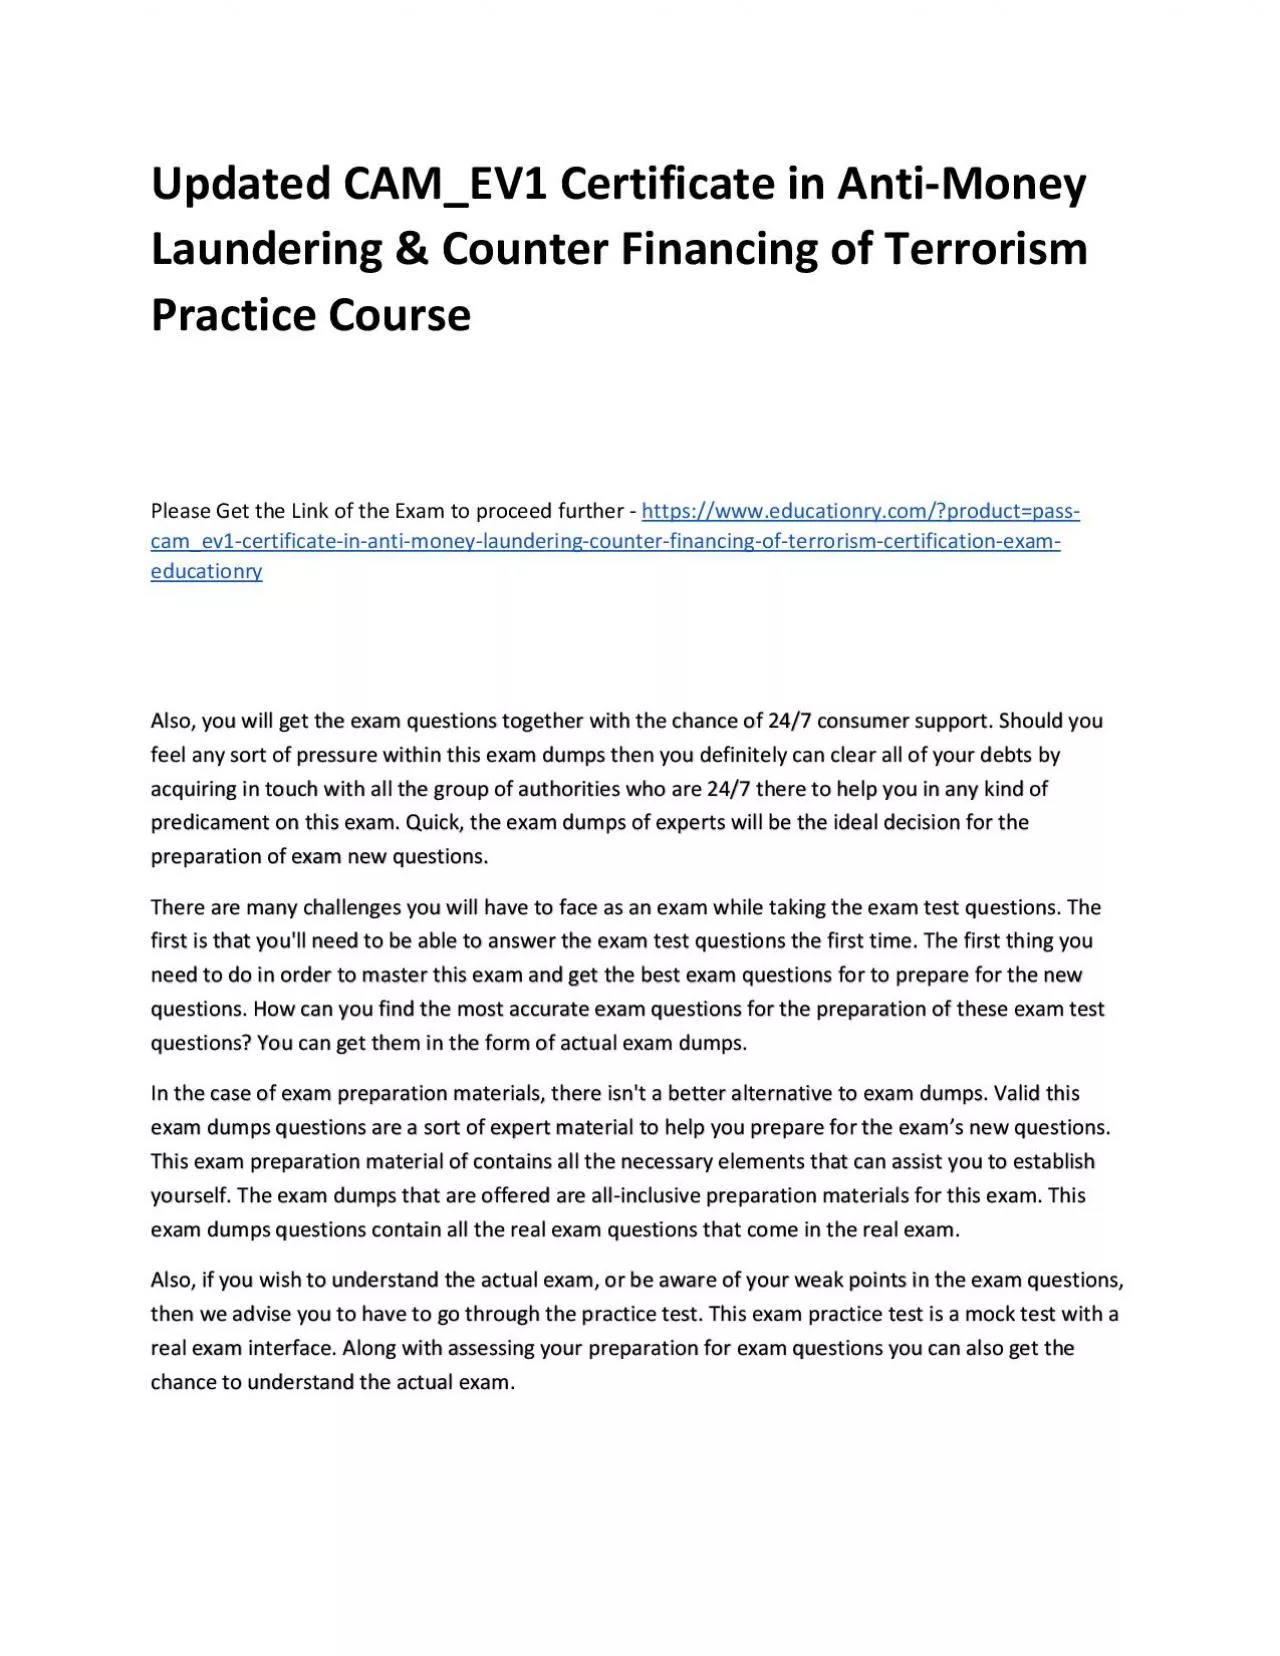 Updated CAM_EV1 Certificate in Anti-Money Laundering & Counter Financing of Terrorism